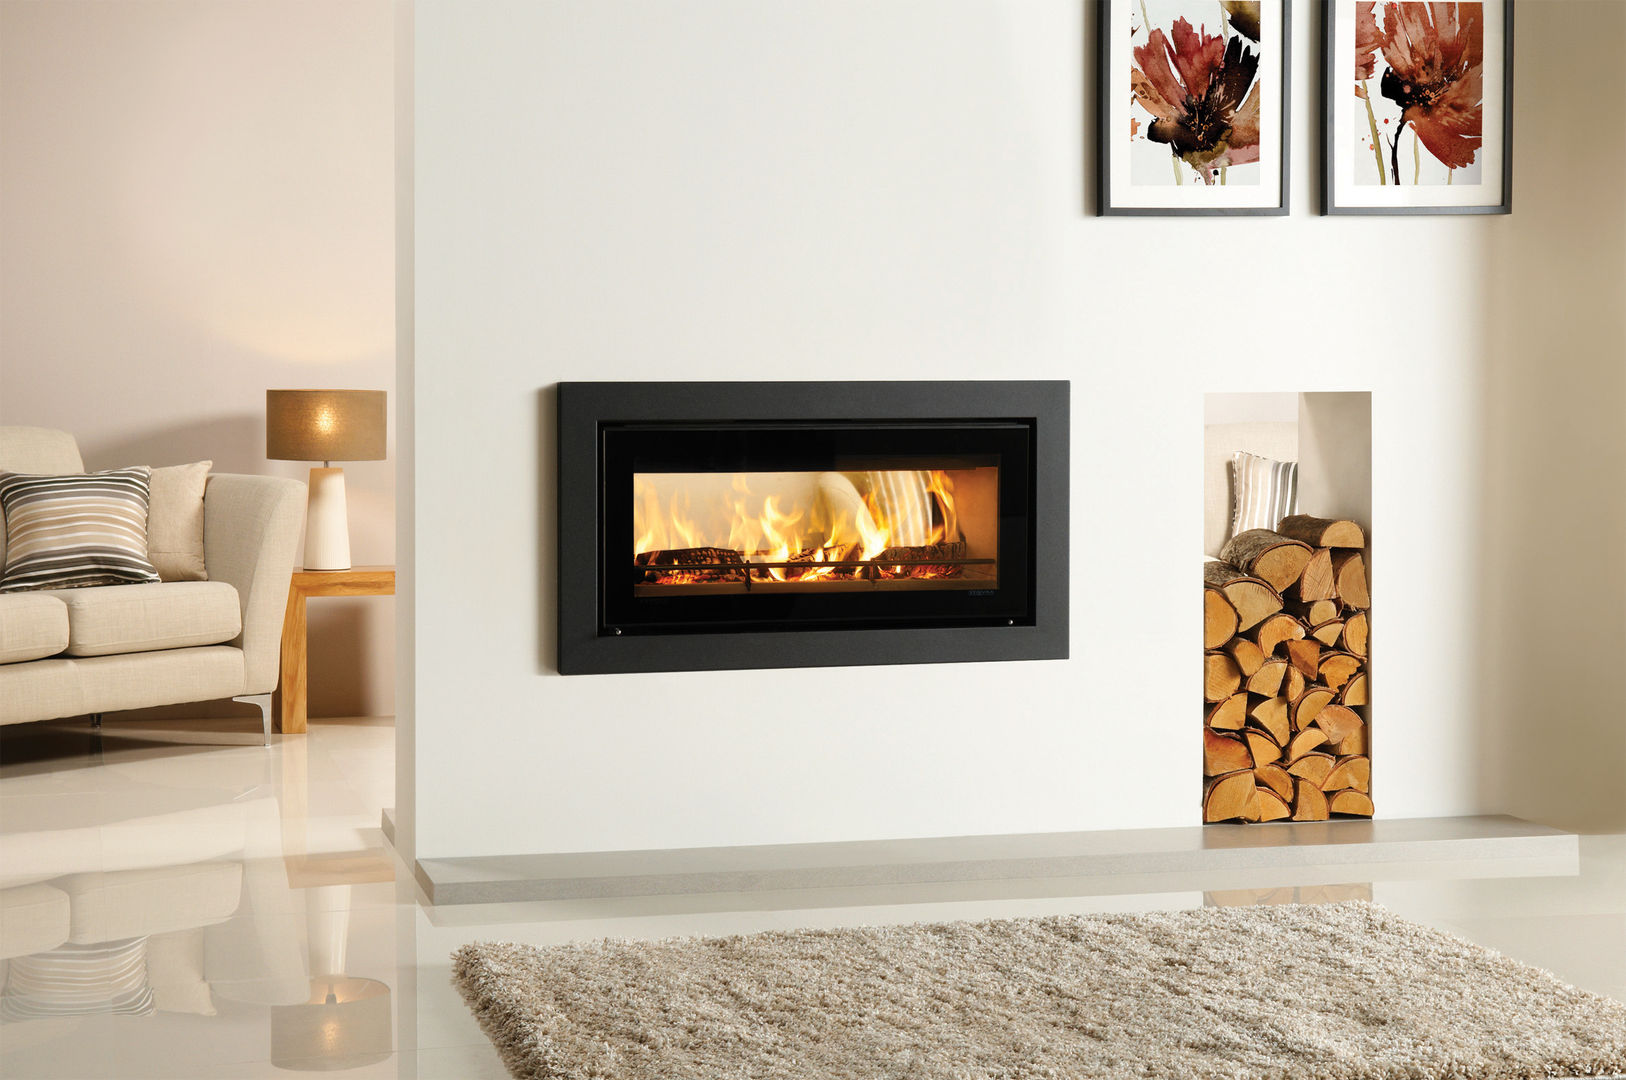 Riva Studio Duplex Fire Stovax Heating Group Salas modernas Chimeneas y accesorios